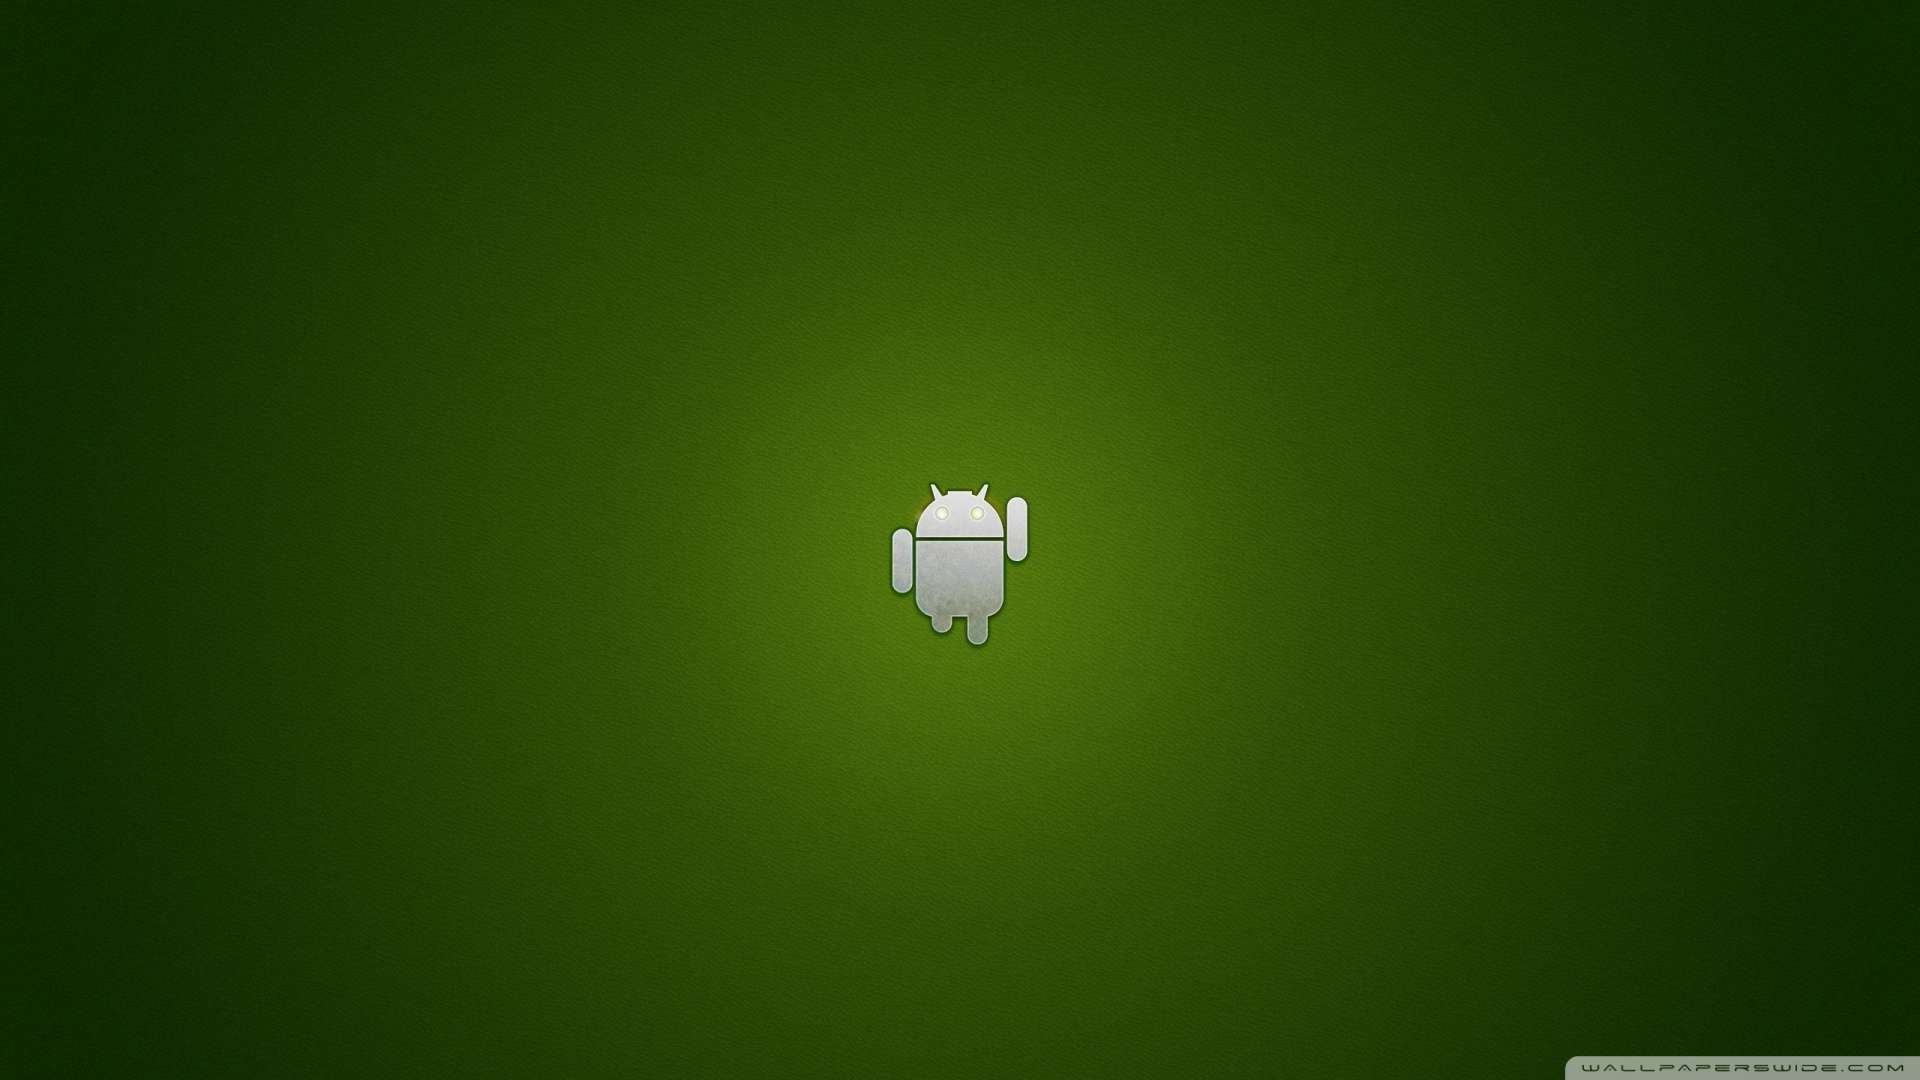 Now Google Android Logo Wallpaper 1080p HD Read Description